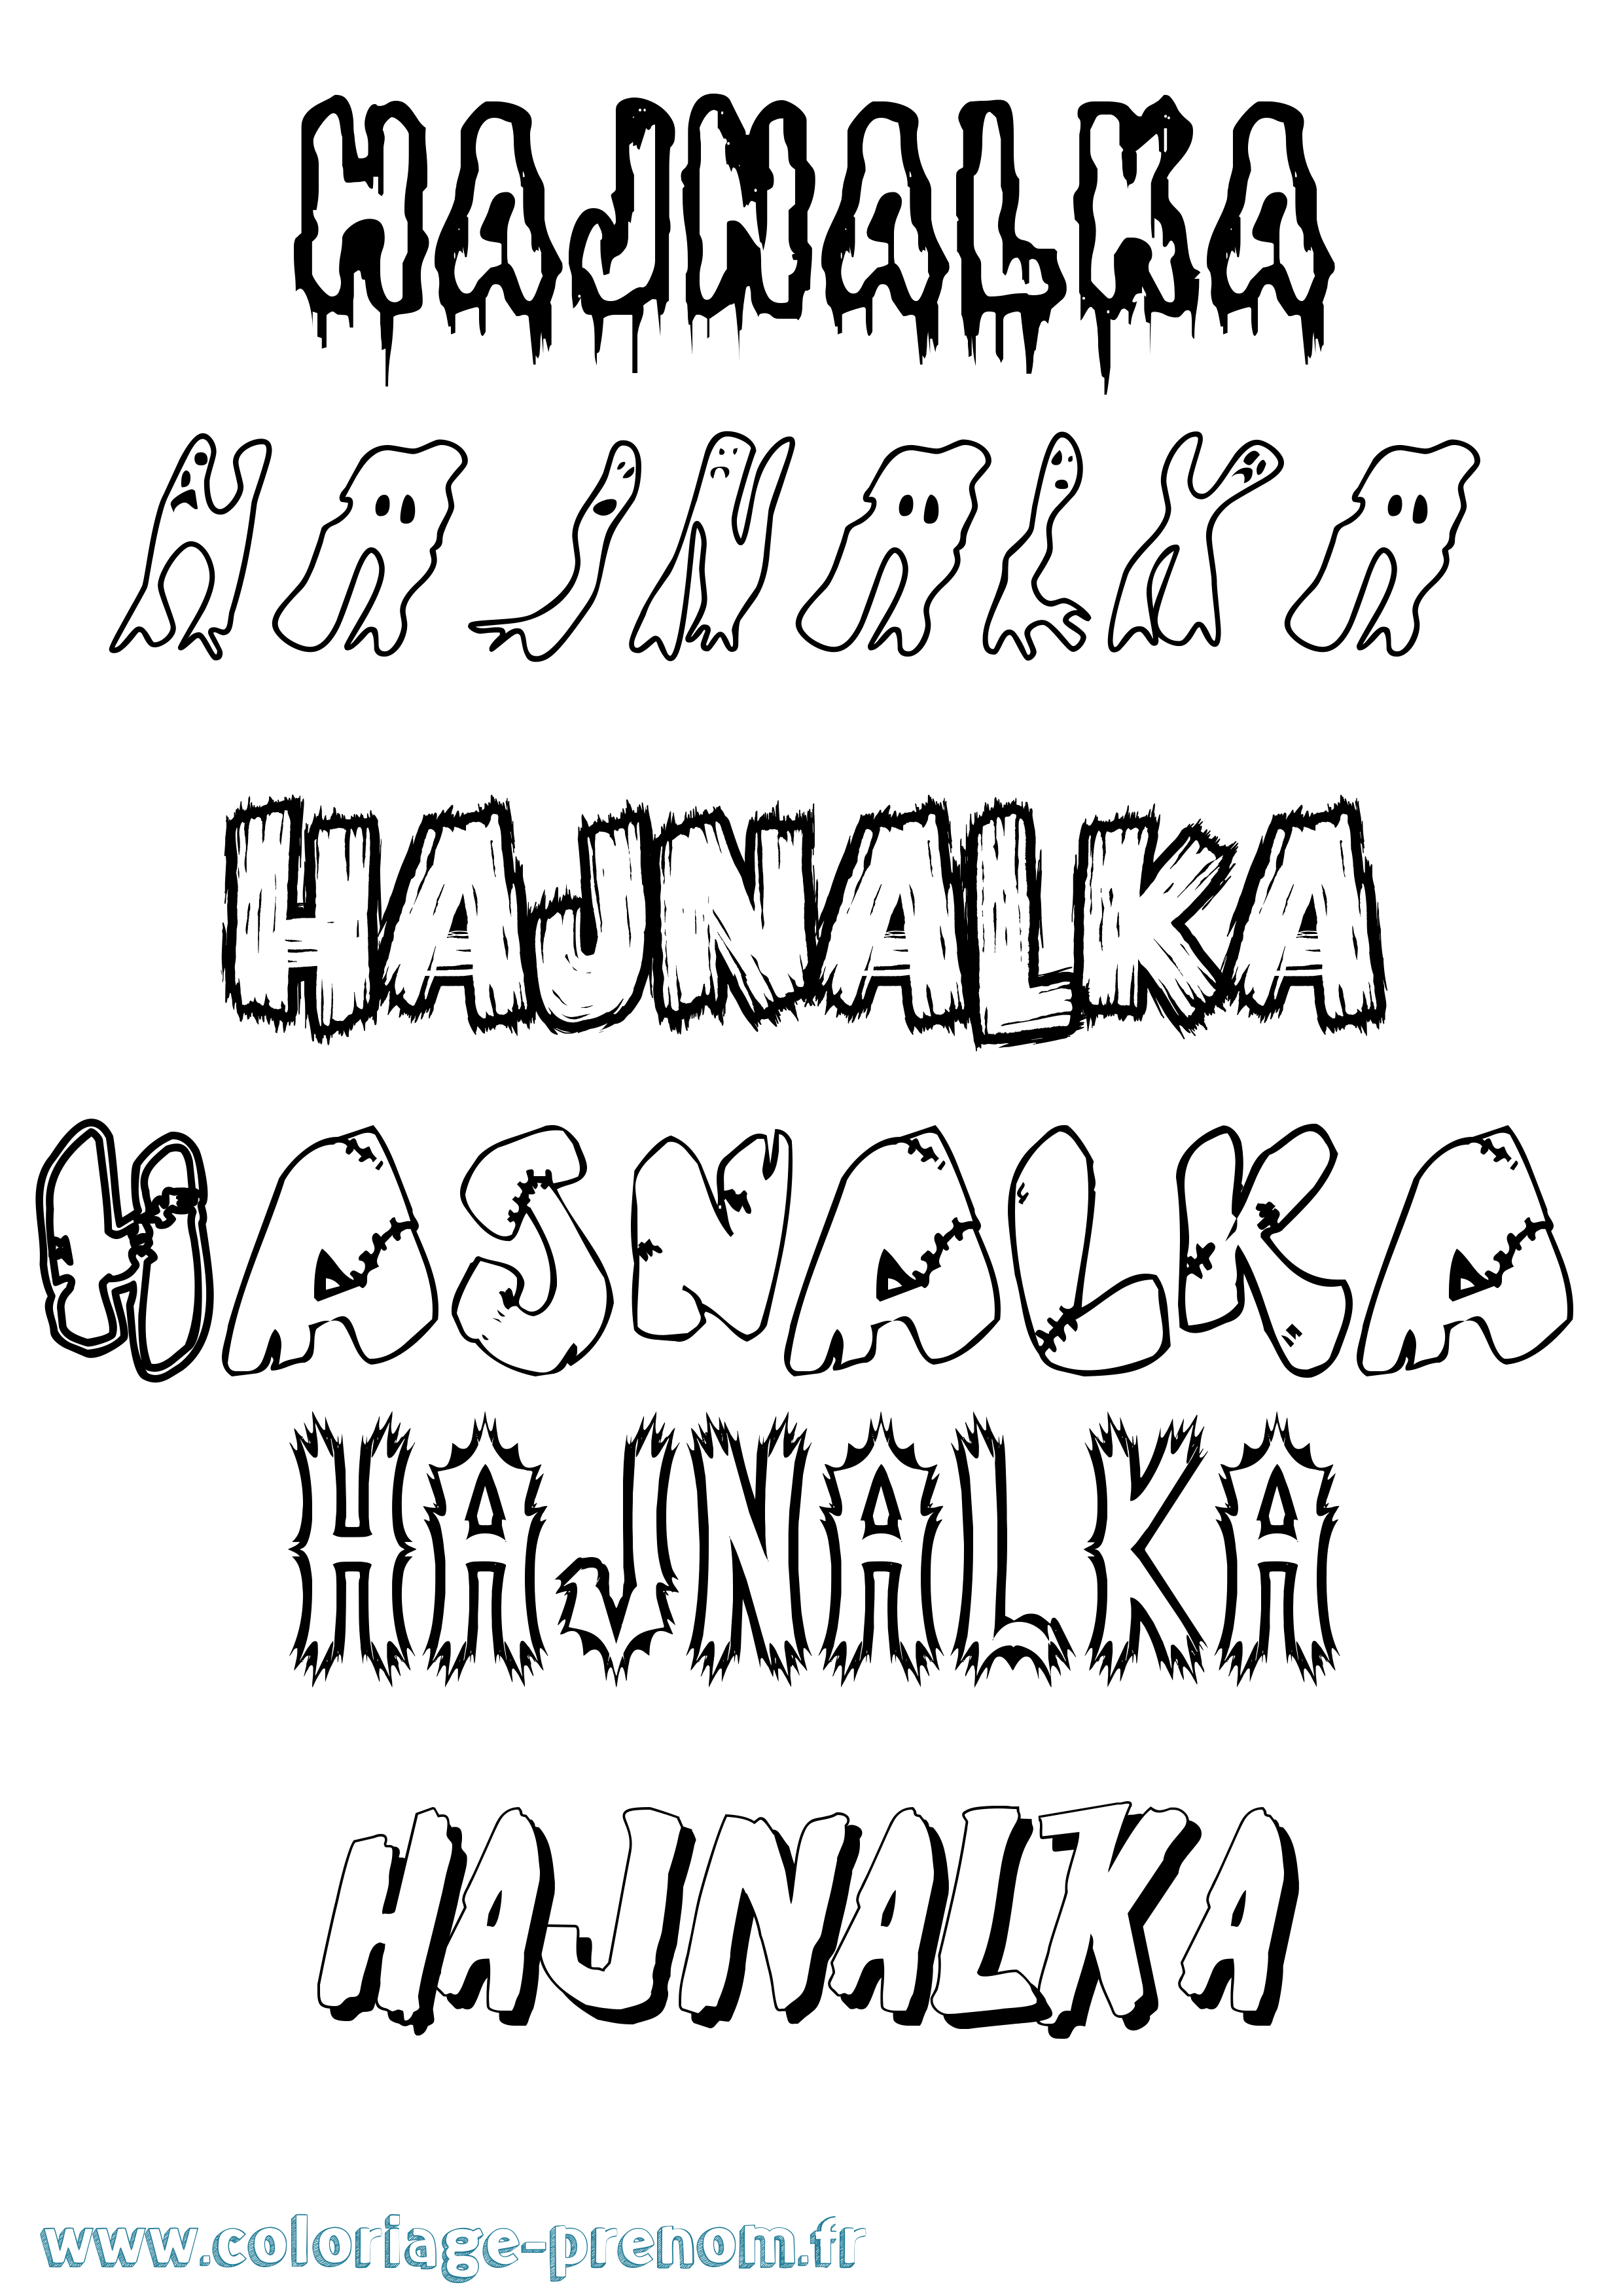 Coloriage prénom Hajnalka Frisson